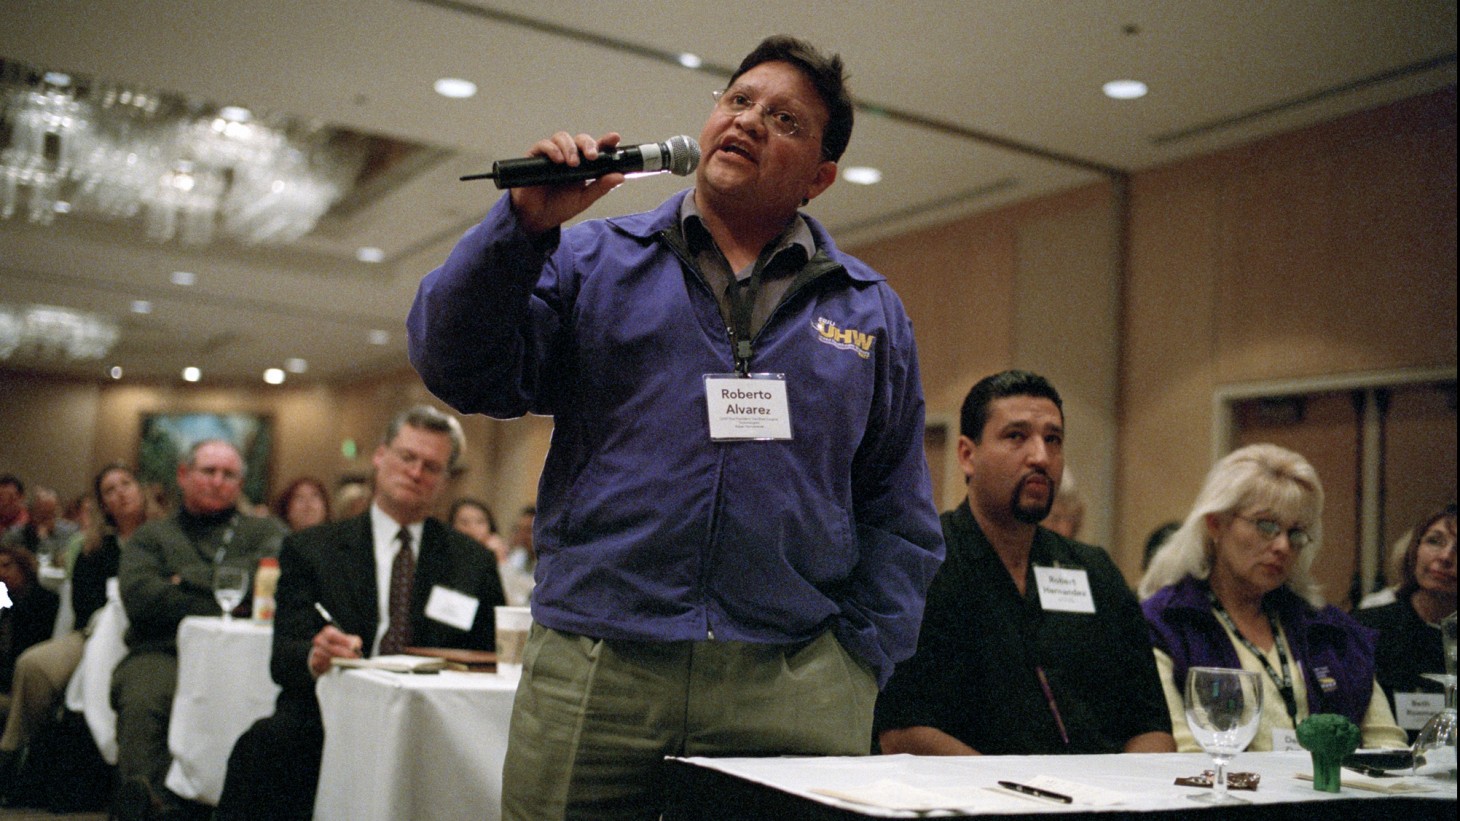 A UHW member (wearing purple jacket) speaks into a microphone